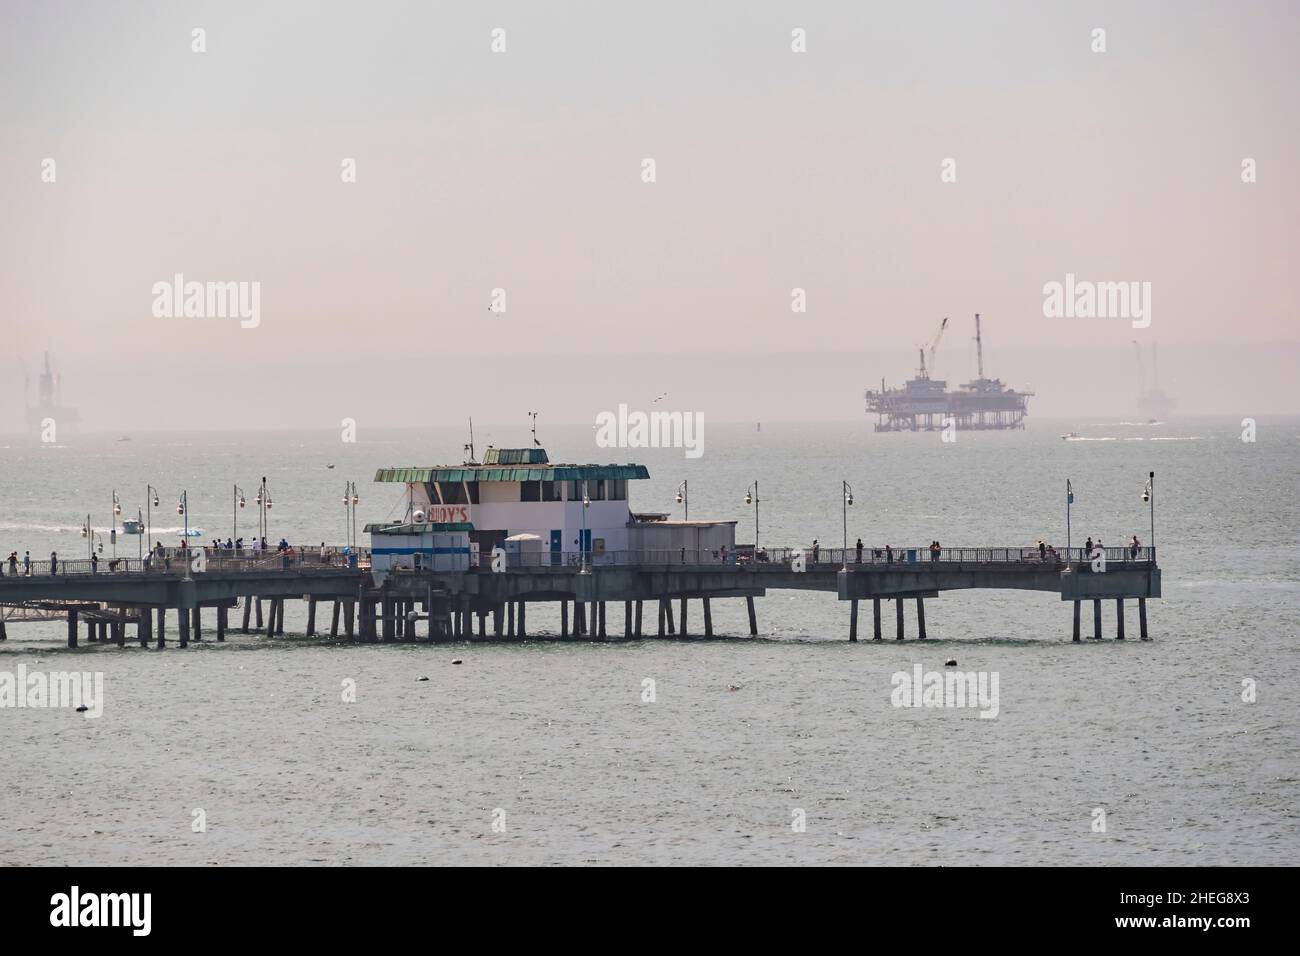 Los Angeles, JUN 20 2016 - Hazy view of the Belmont Veterans Memorial Pier Stock Photo